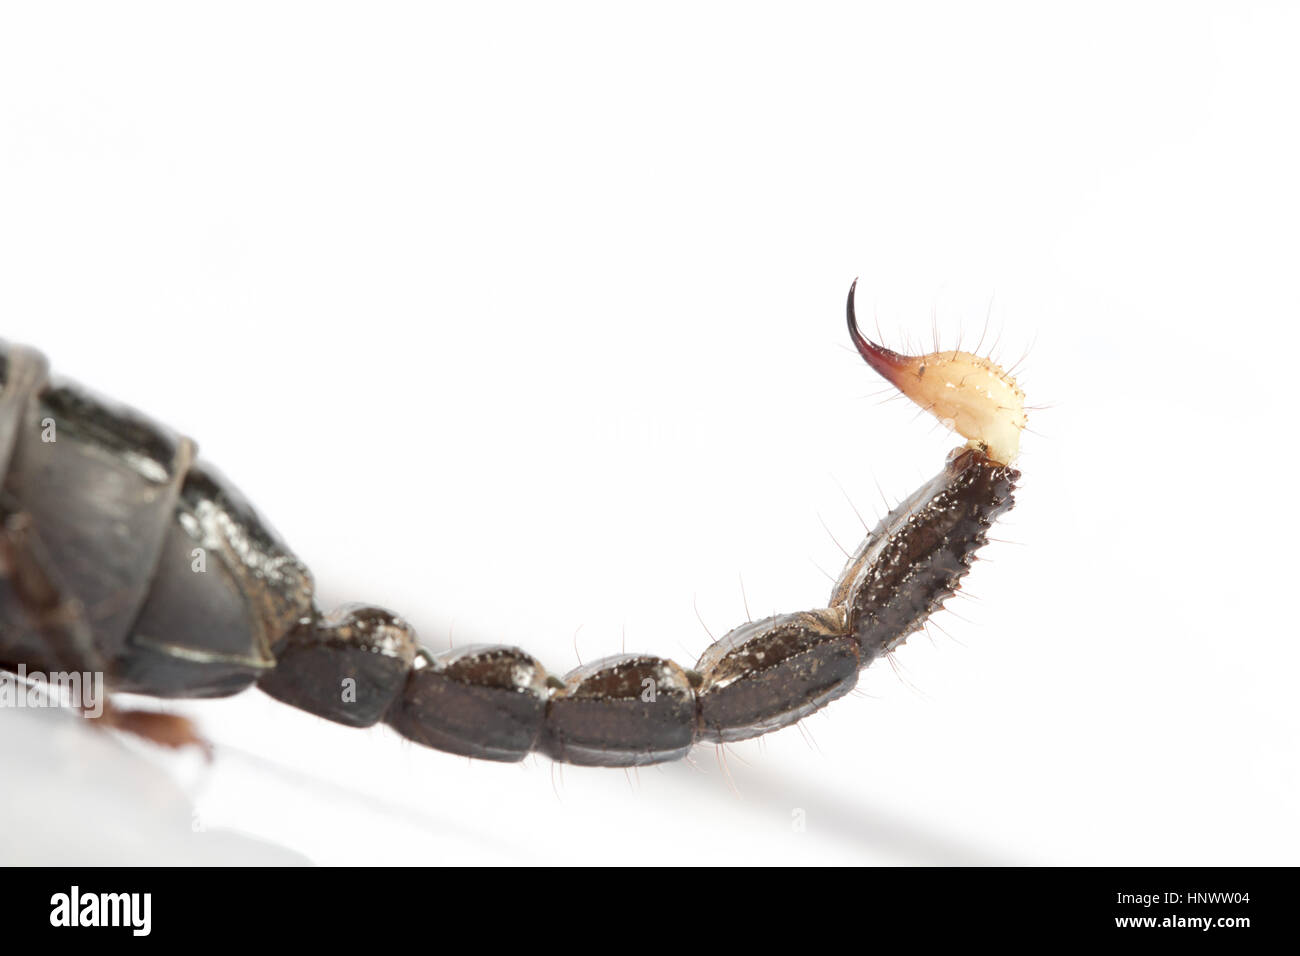 Burrowing scorpion, Heterometrus sp., Udanti Tiger Reserve, Chhattisgarh. Large scorpion with massive pincers. Stock Photo